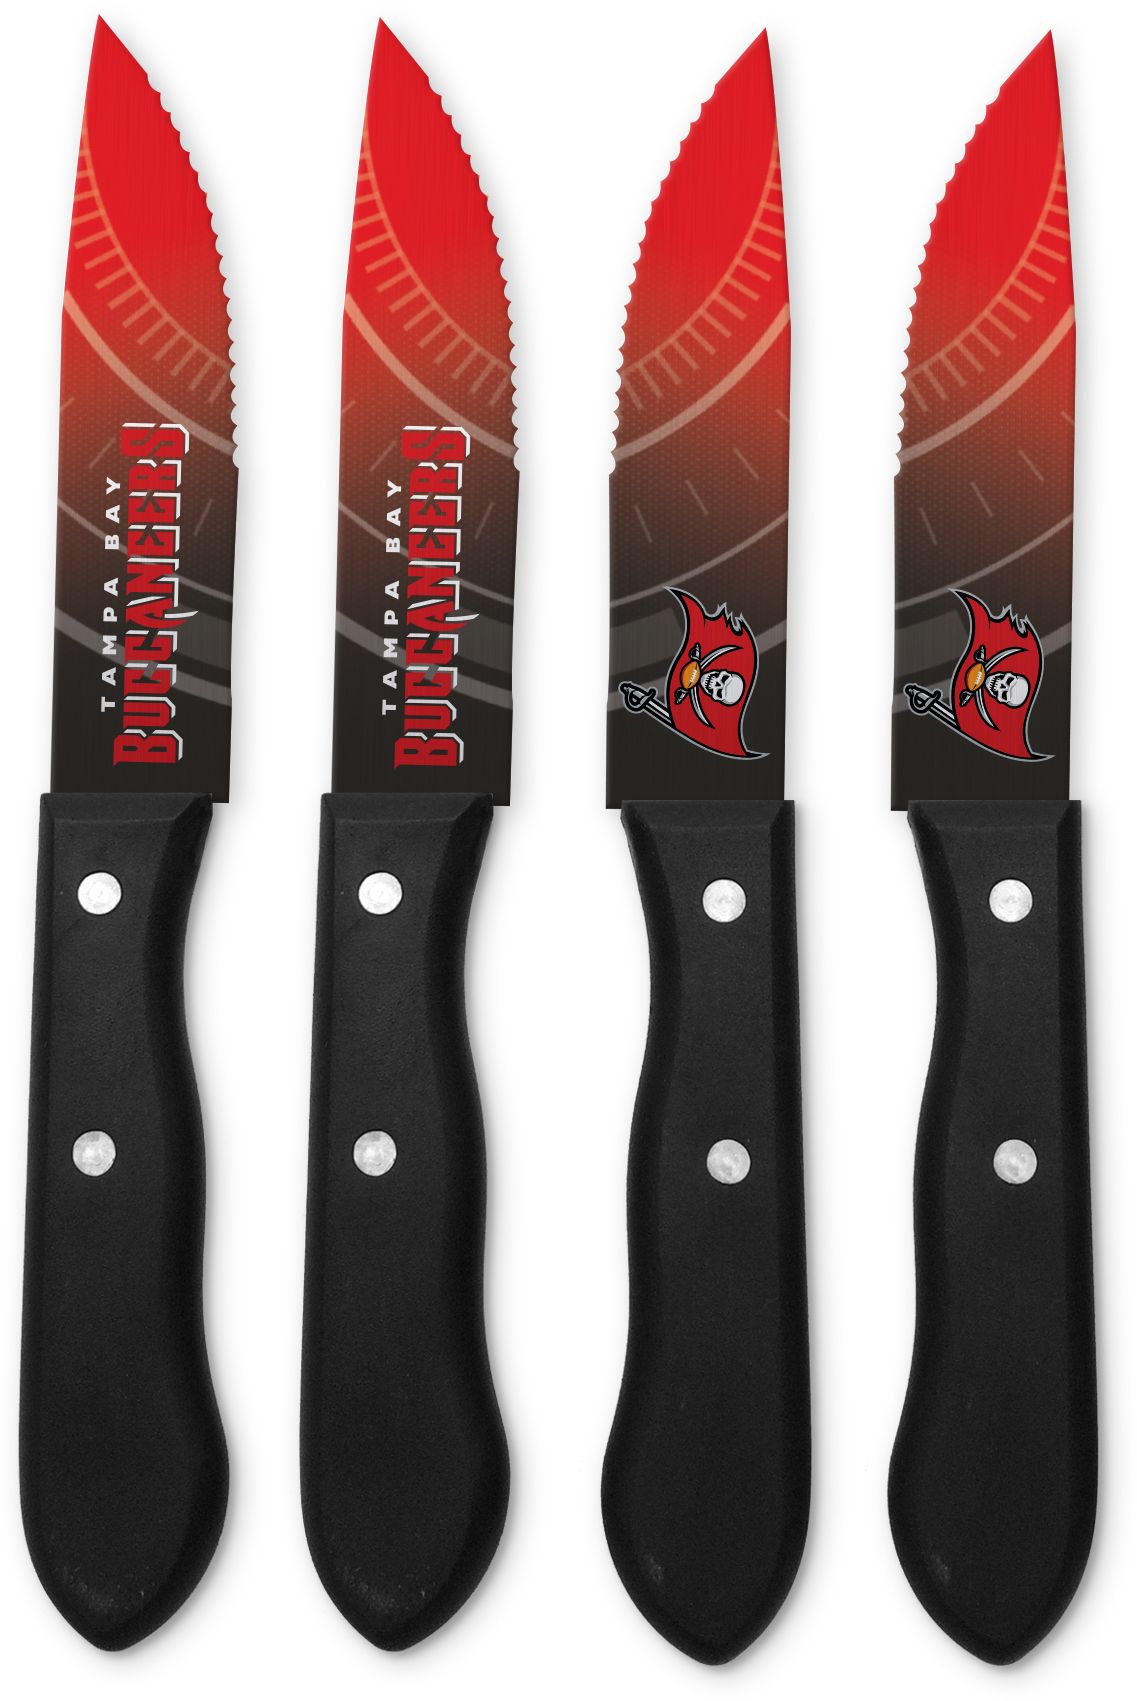 Sports Vault Tampa Bay Buccaneers Steak Knives